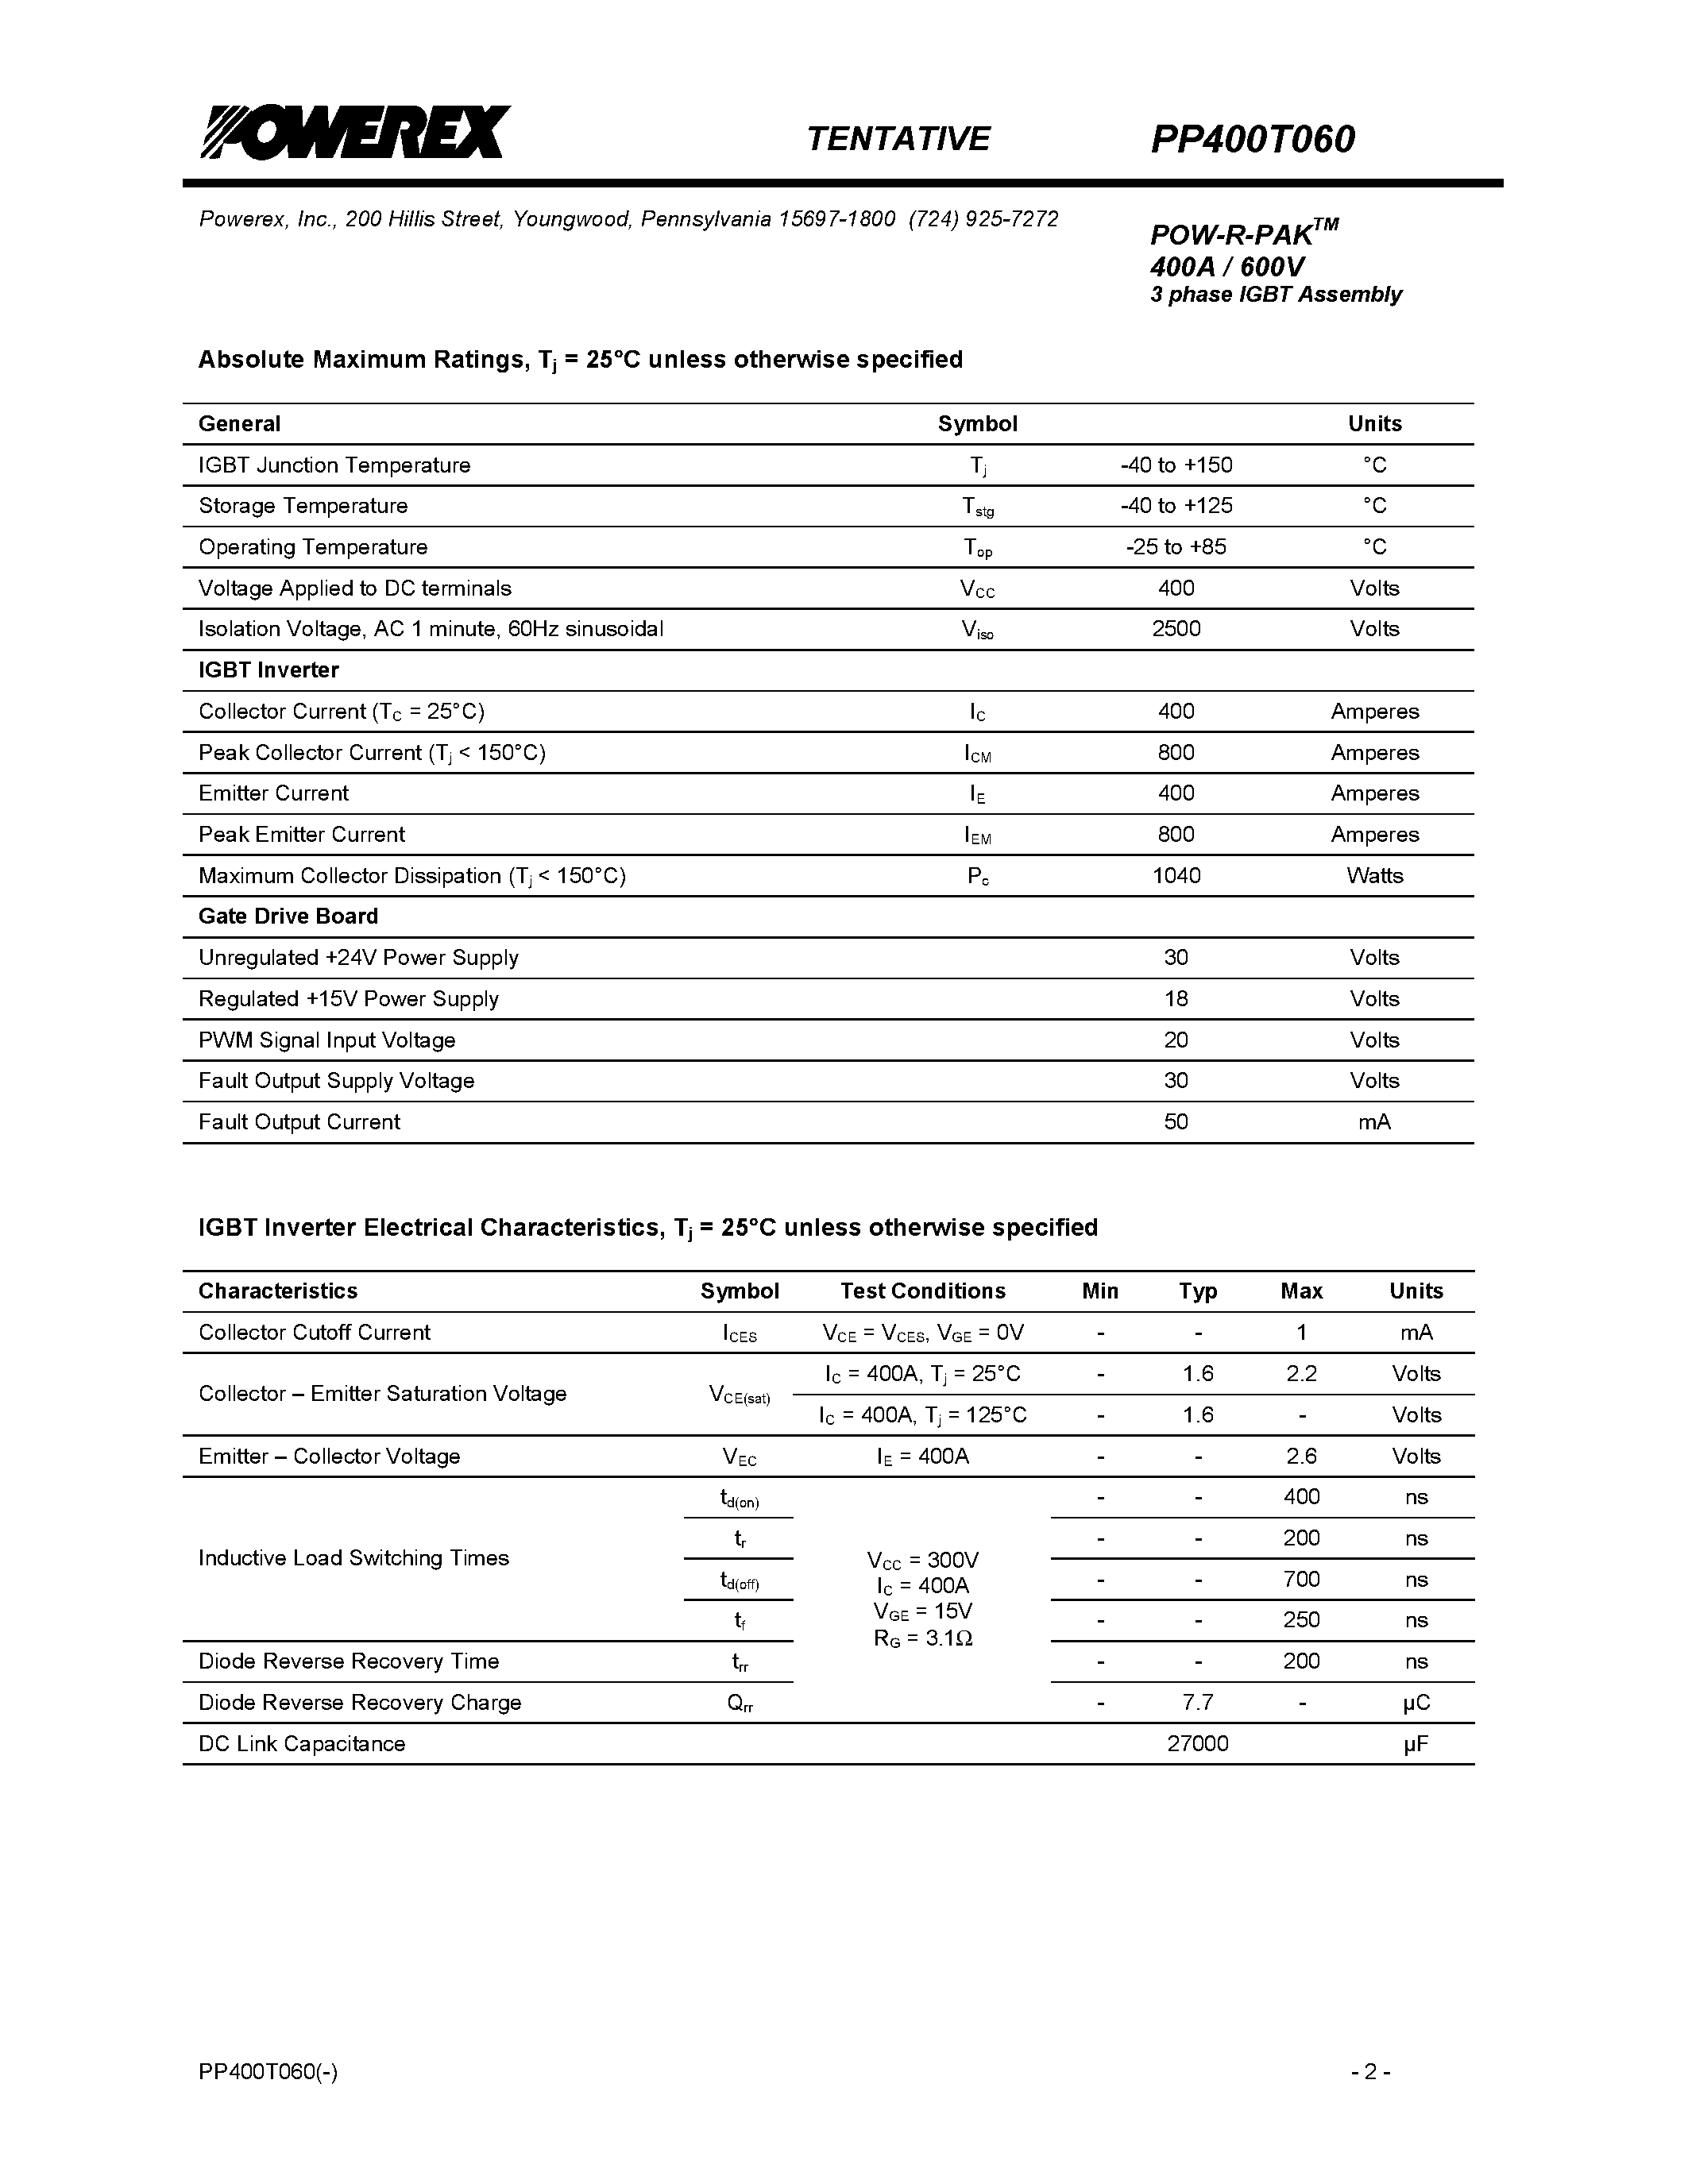 Datasheet PP400T060 - POW-R-PAK 400A / 600V 3 phase IGBT Assembly page 2